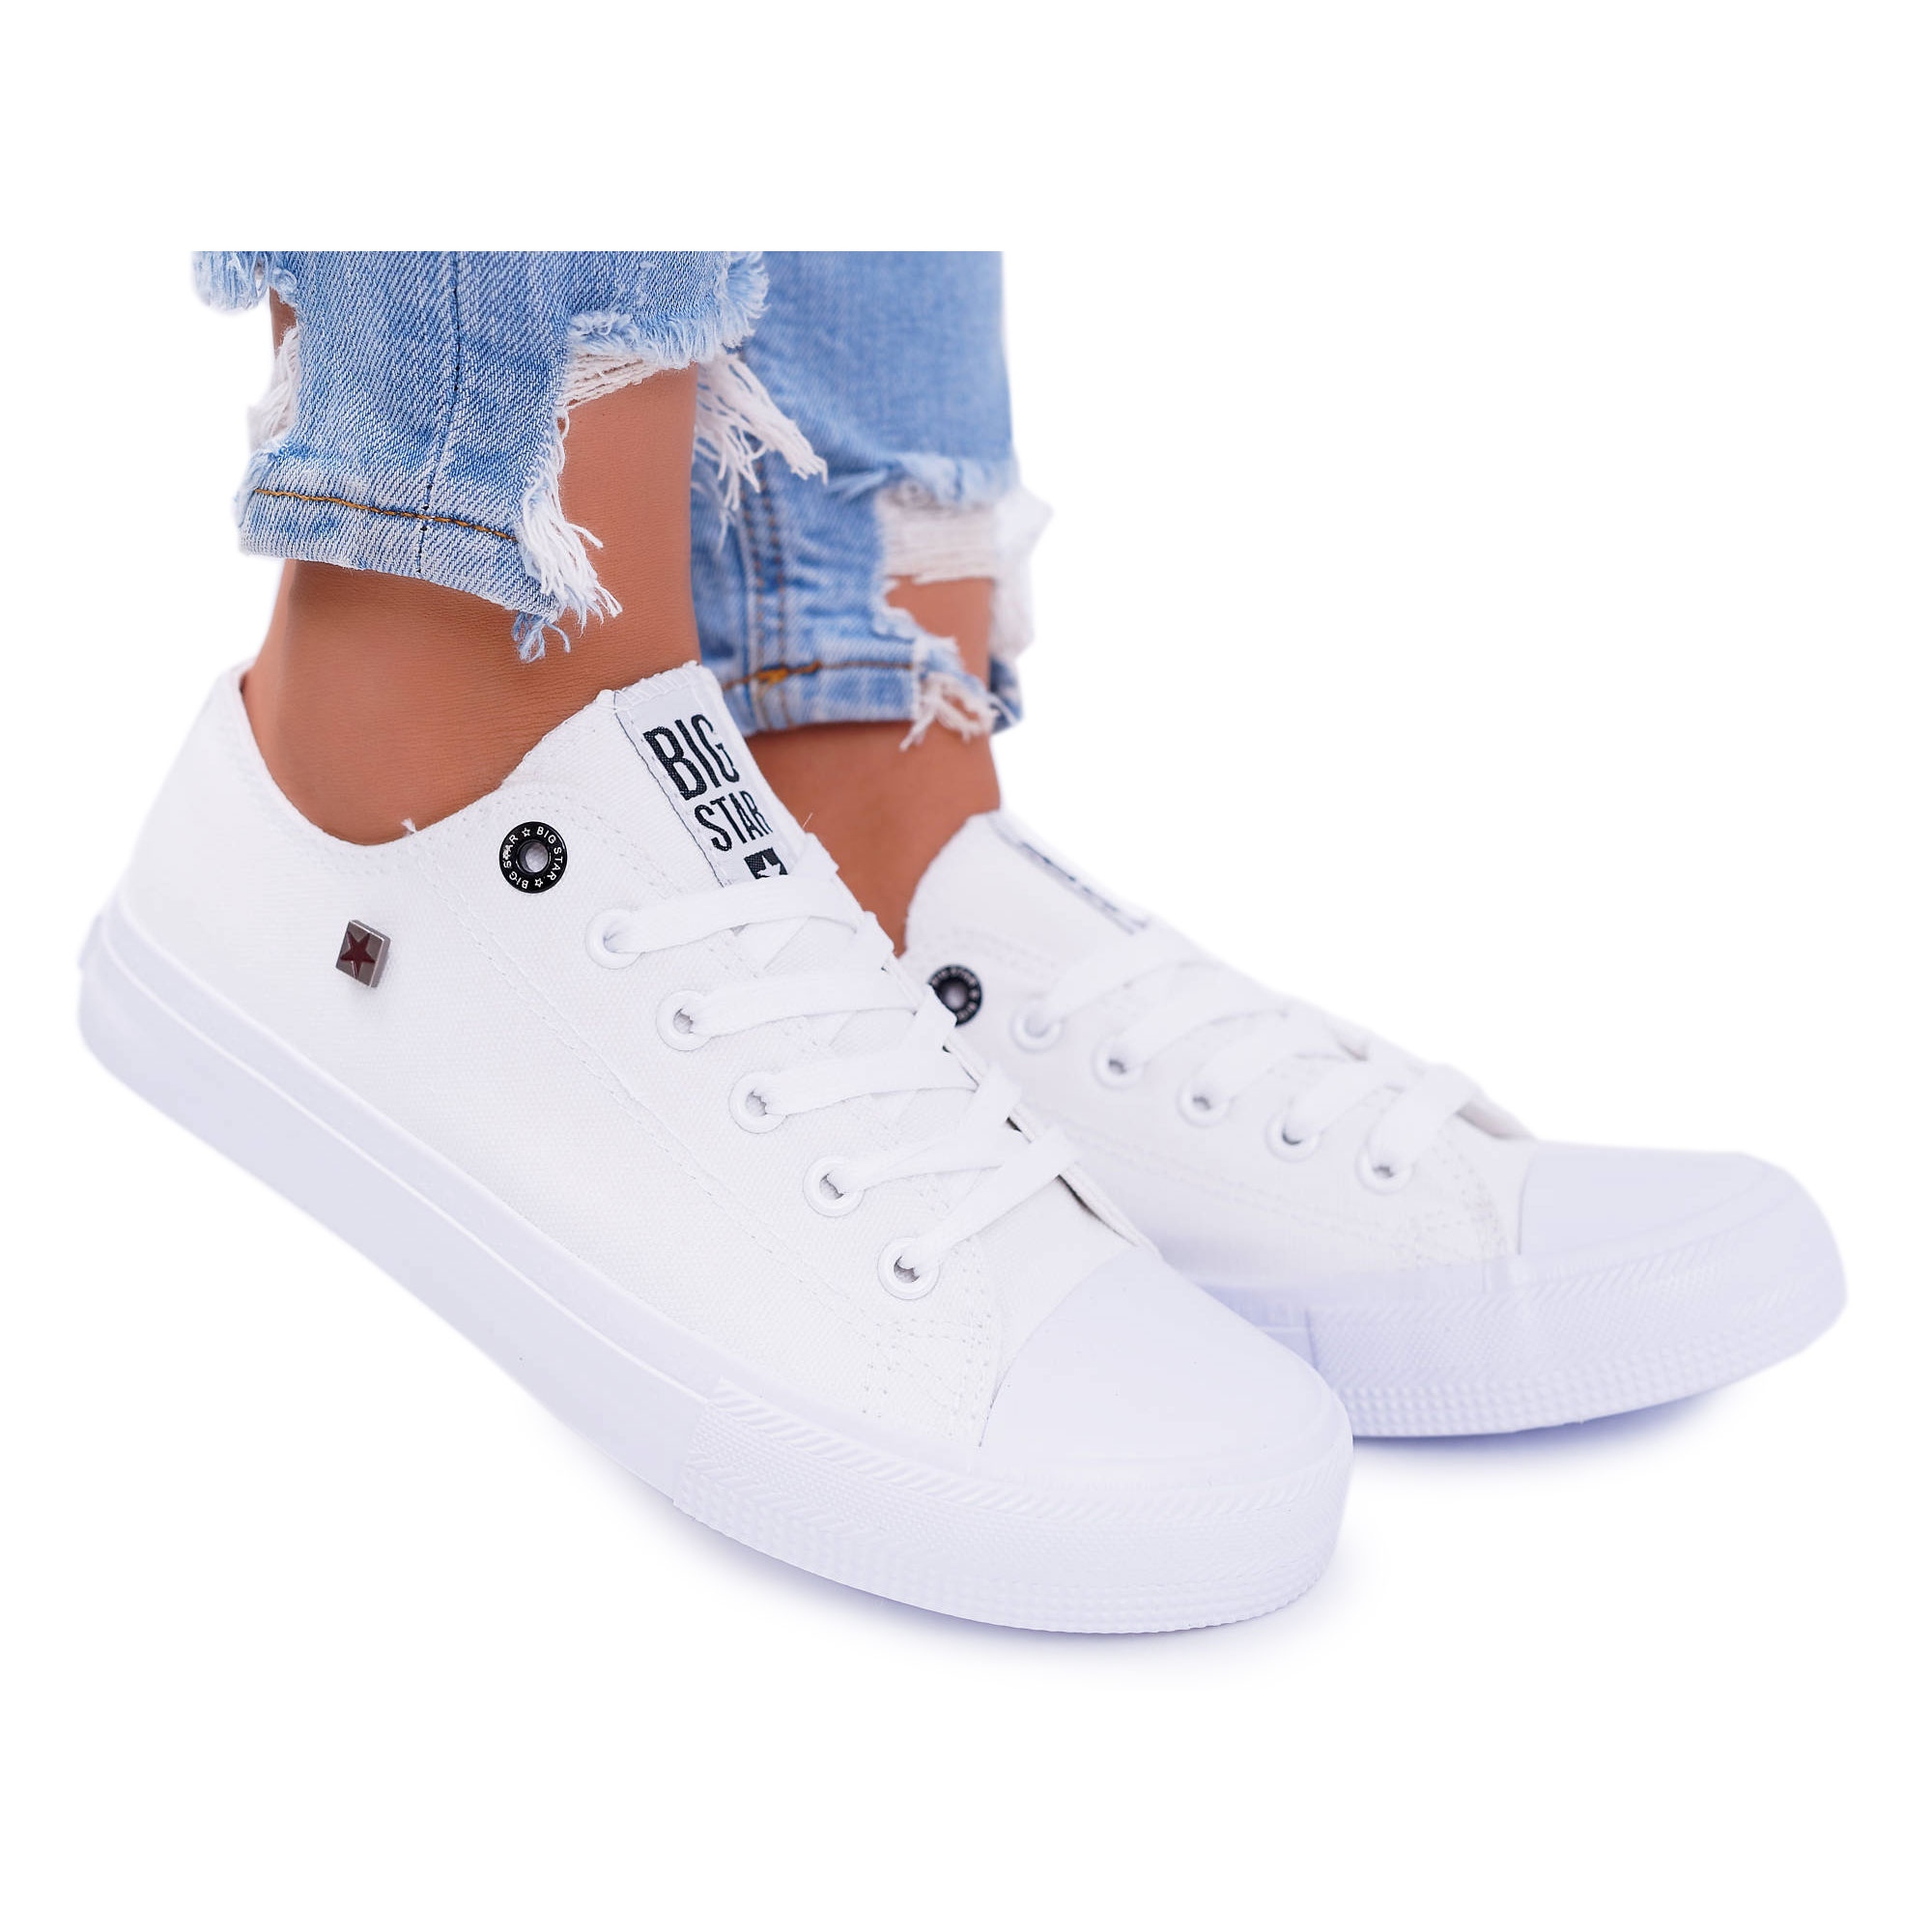 Big Star LL274071 Women's White Sneakers